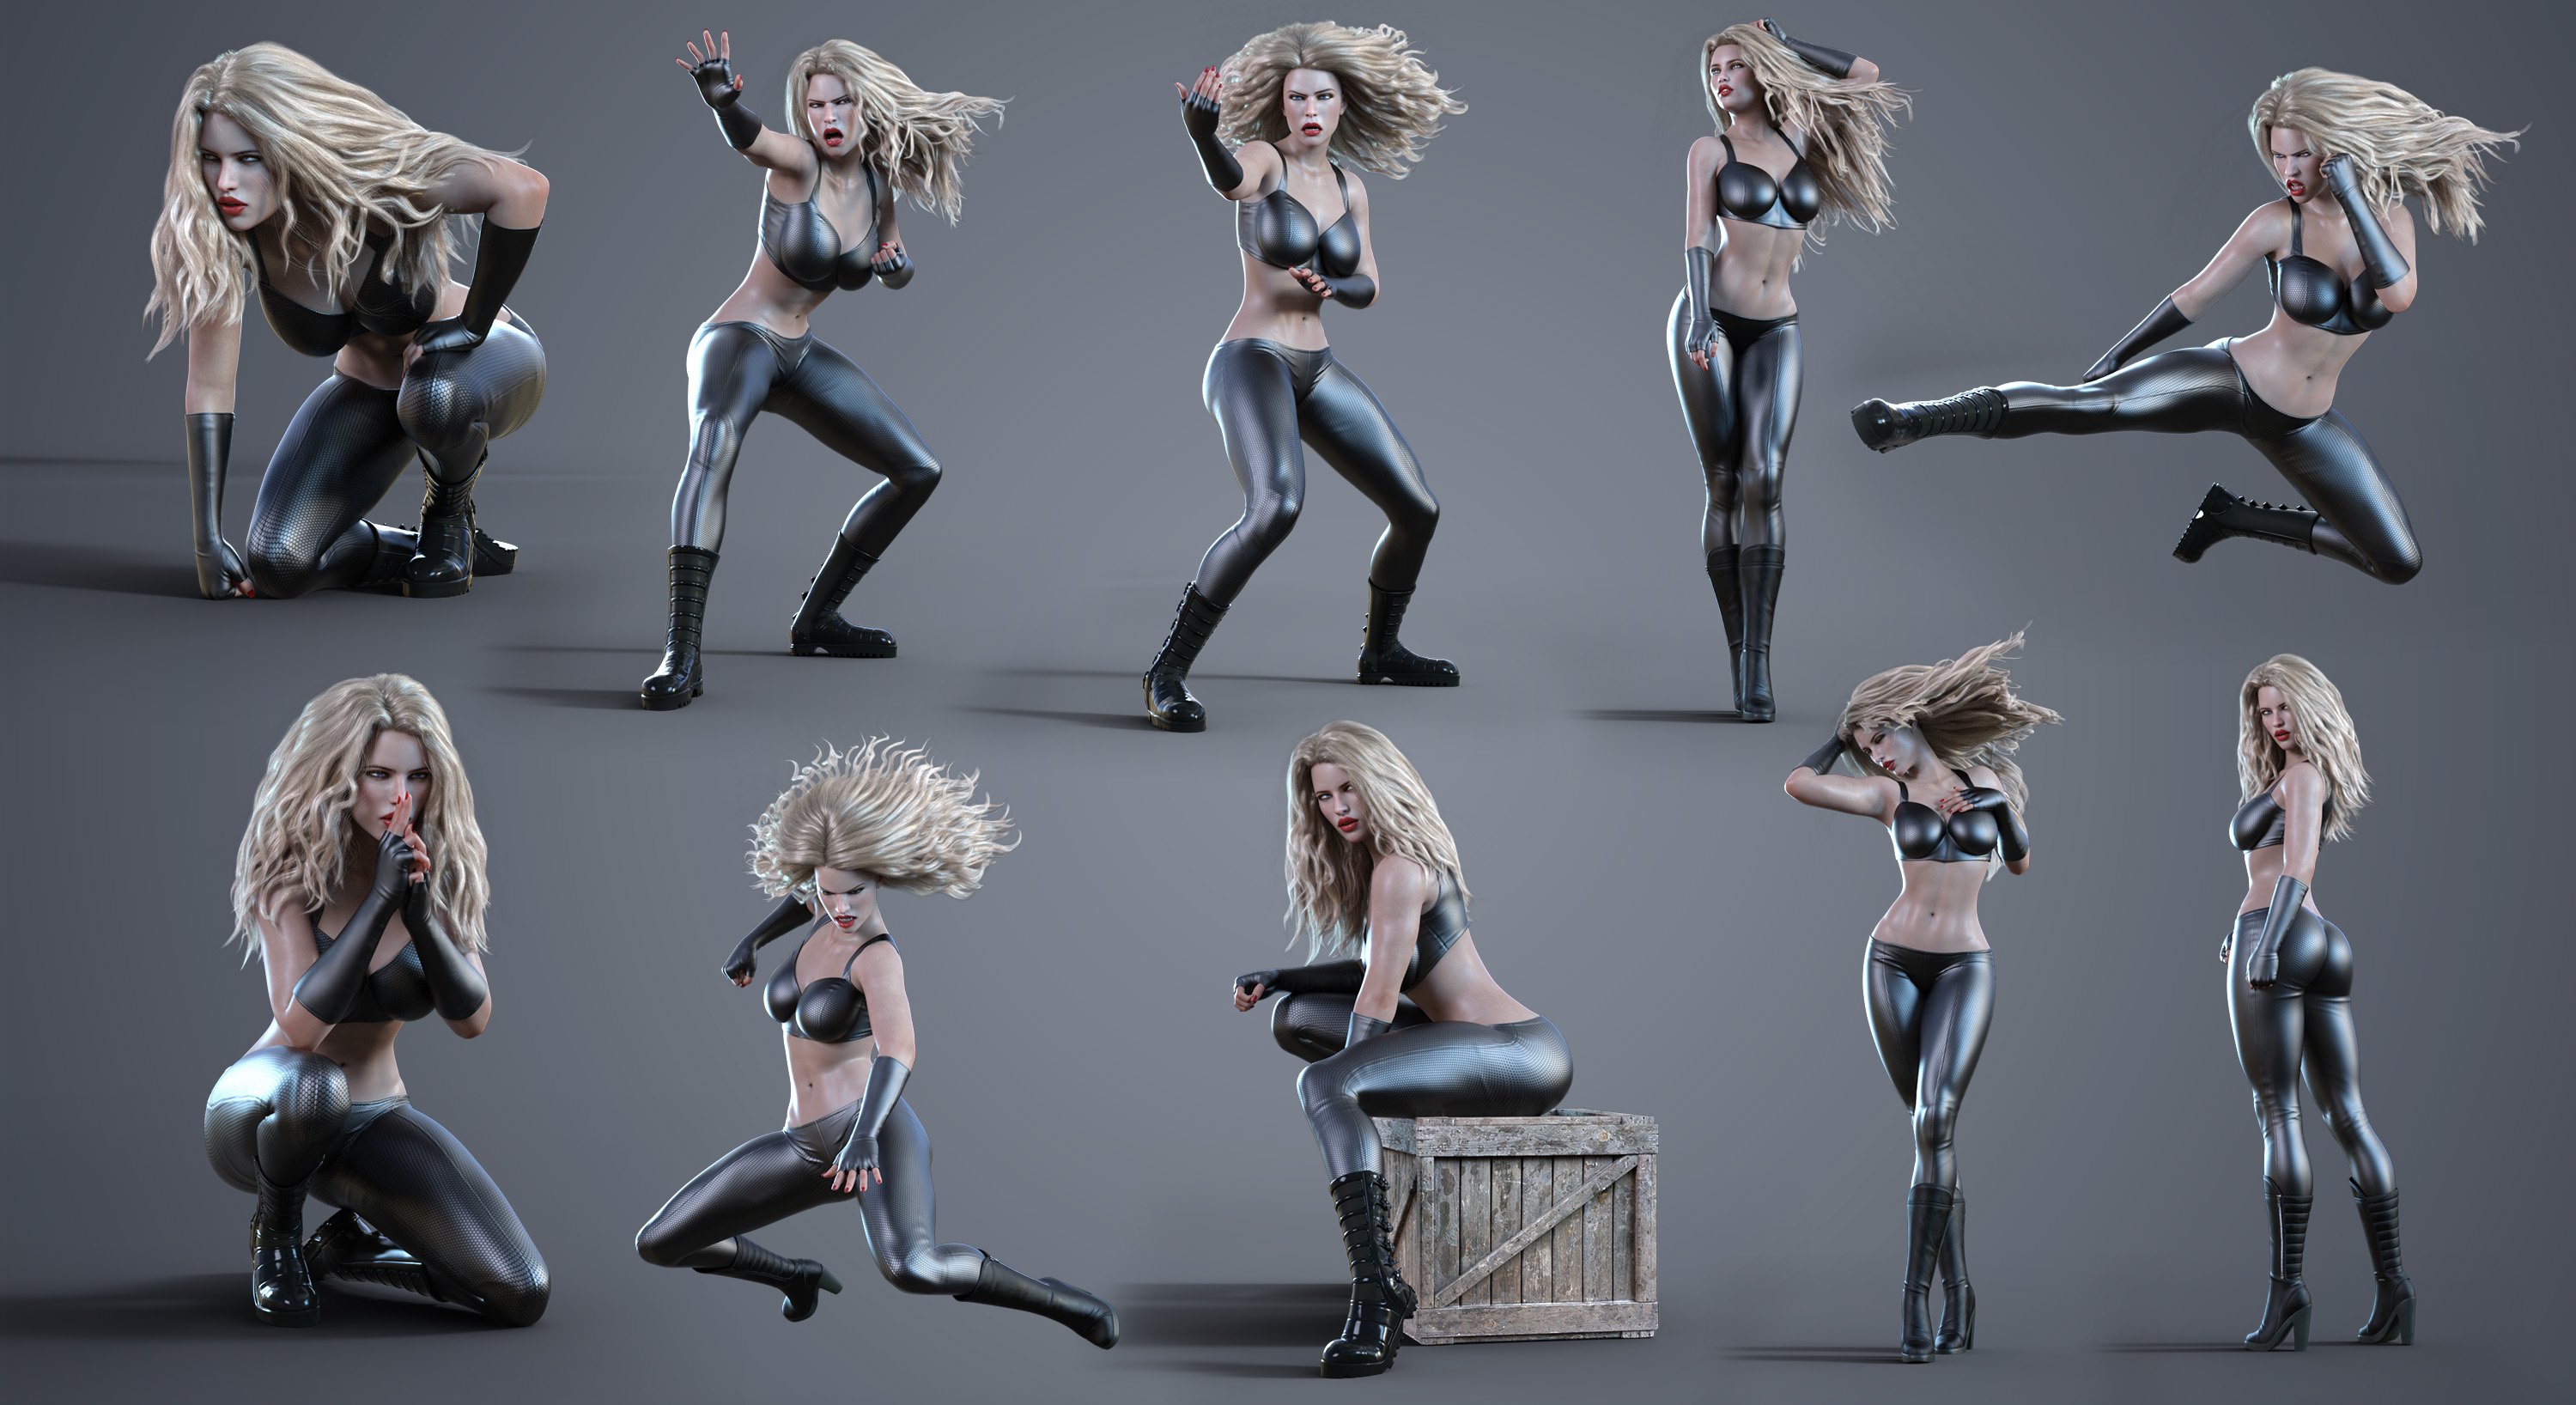 Z All About Action Shape and Pose Mega Set by: Zeddicuss, 3D Models by Daz 3D